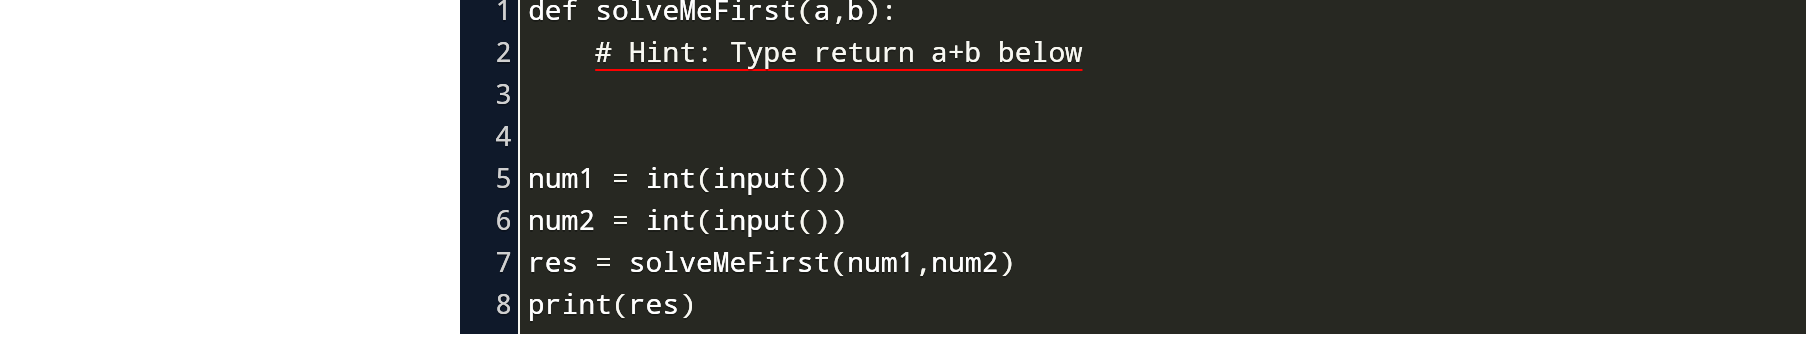 Def Solvemefirst A B Hint Type Return A B Below Num1 Int Input Num2 Int Input Res Solvemefirst Num1 Num2 Print Res Code Example - scp ah 64 apache roblox